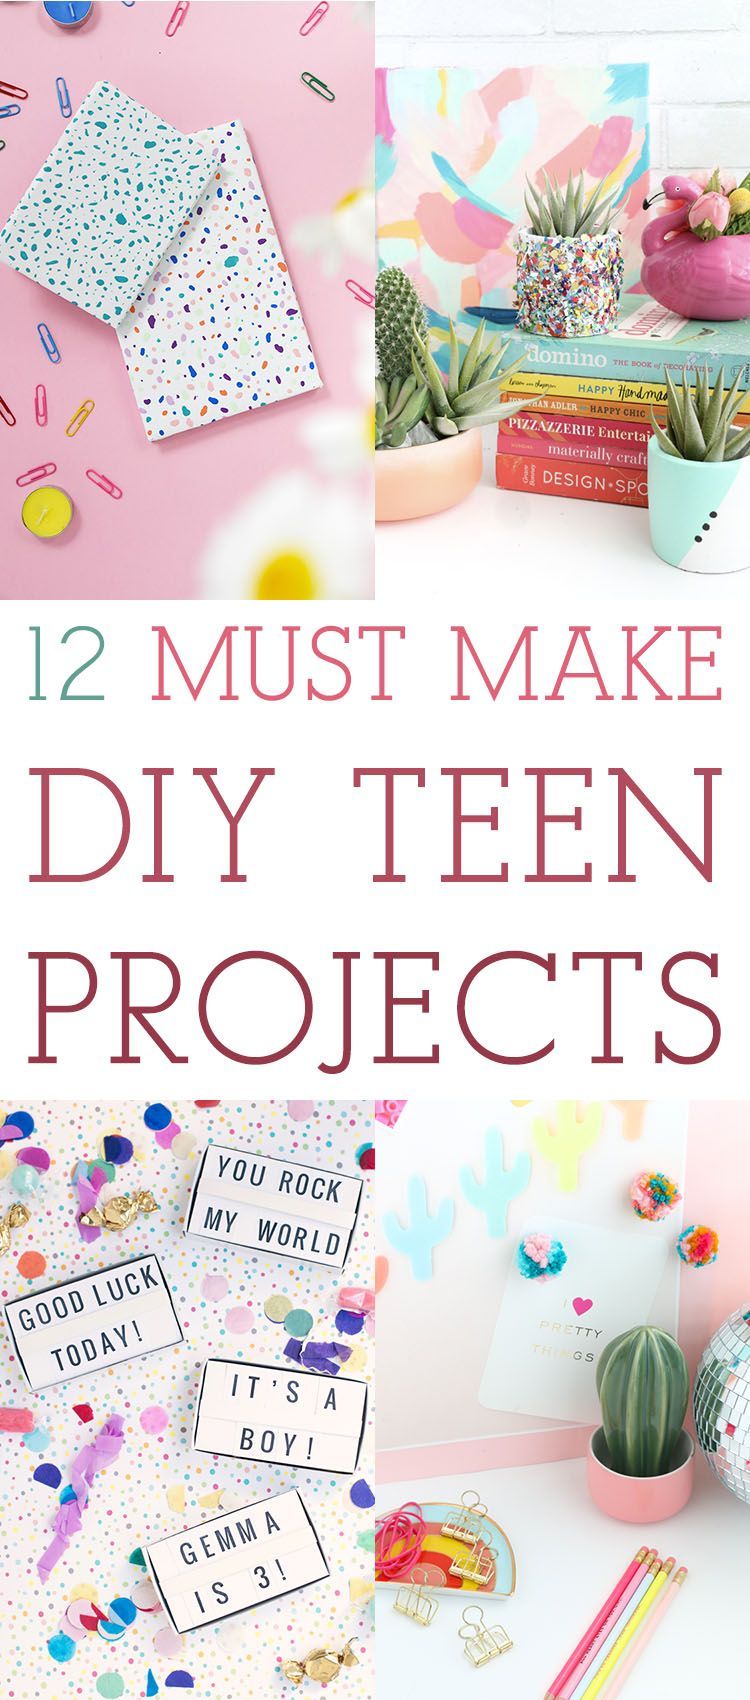 11 diy Pillows for teens ideas